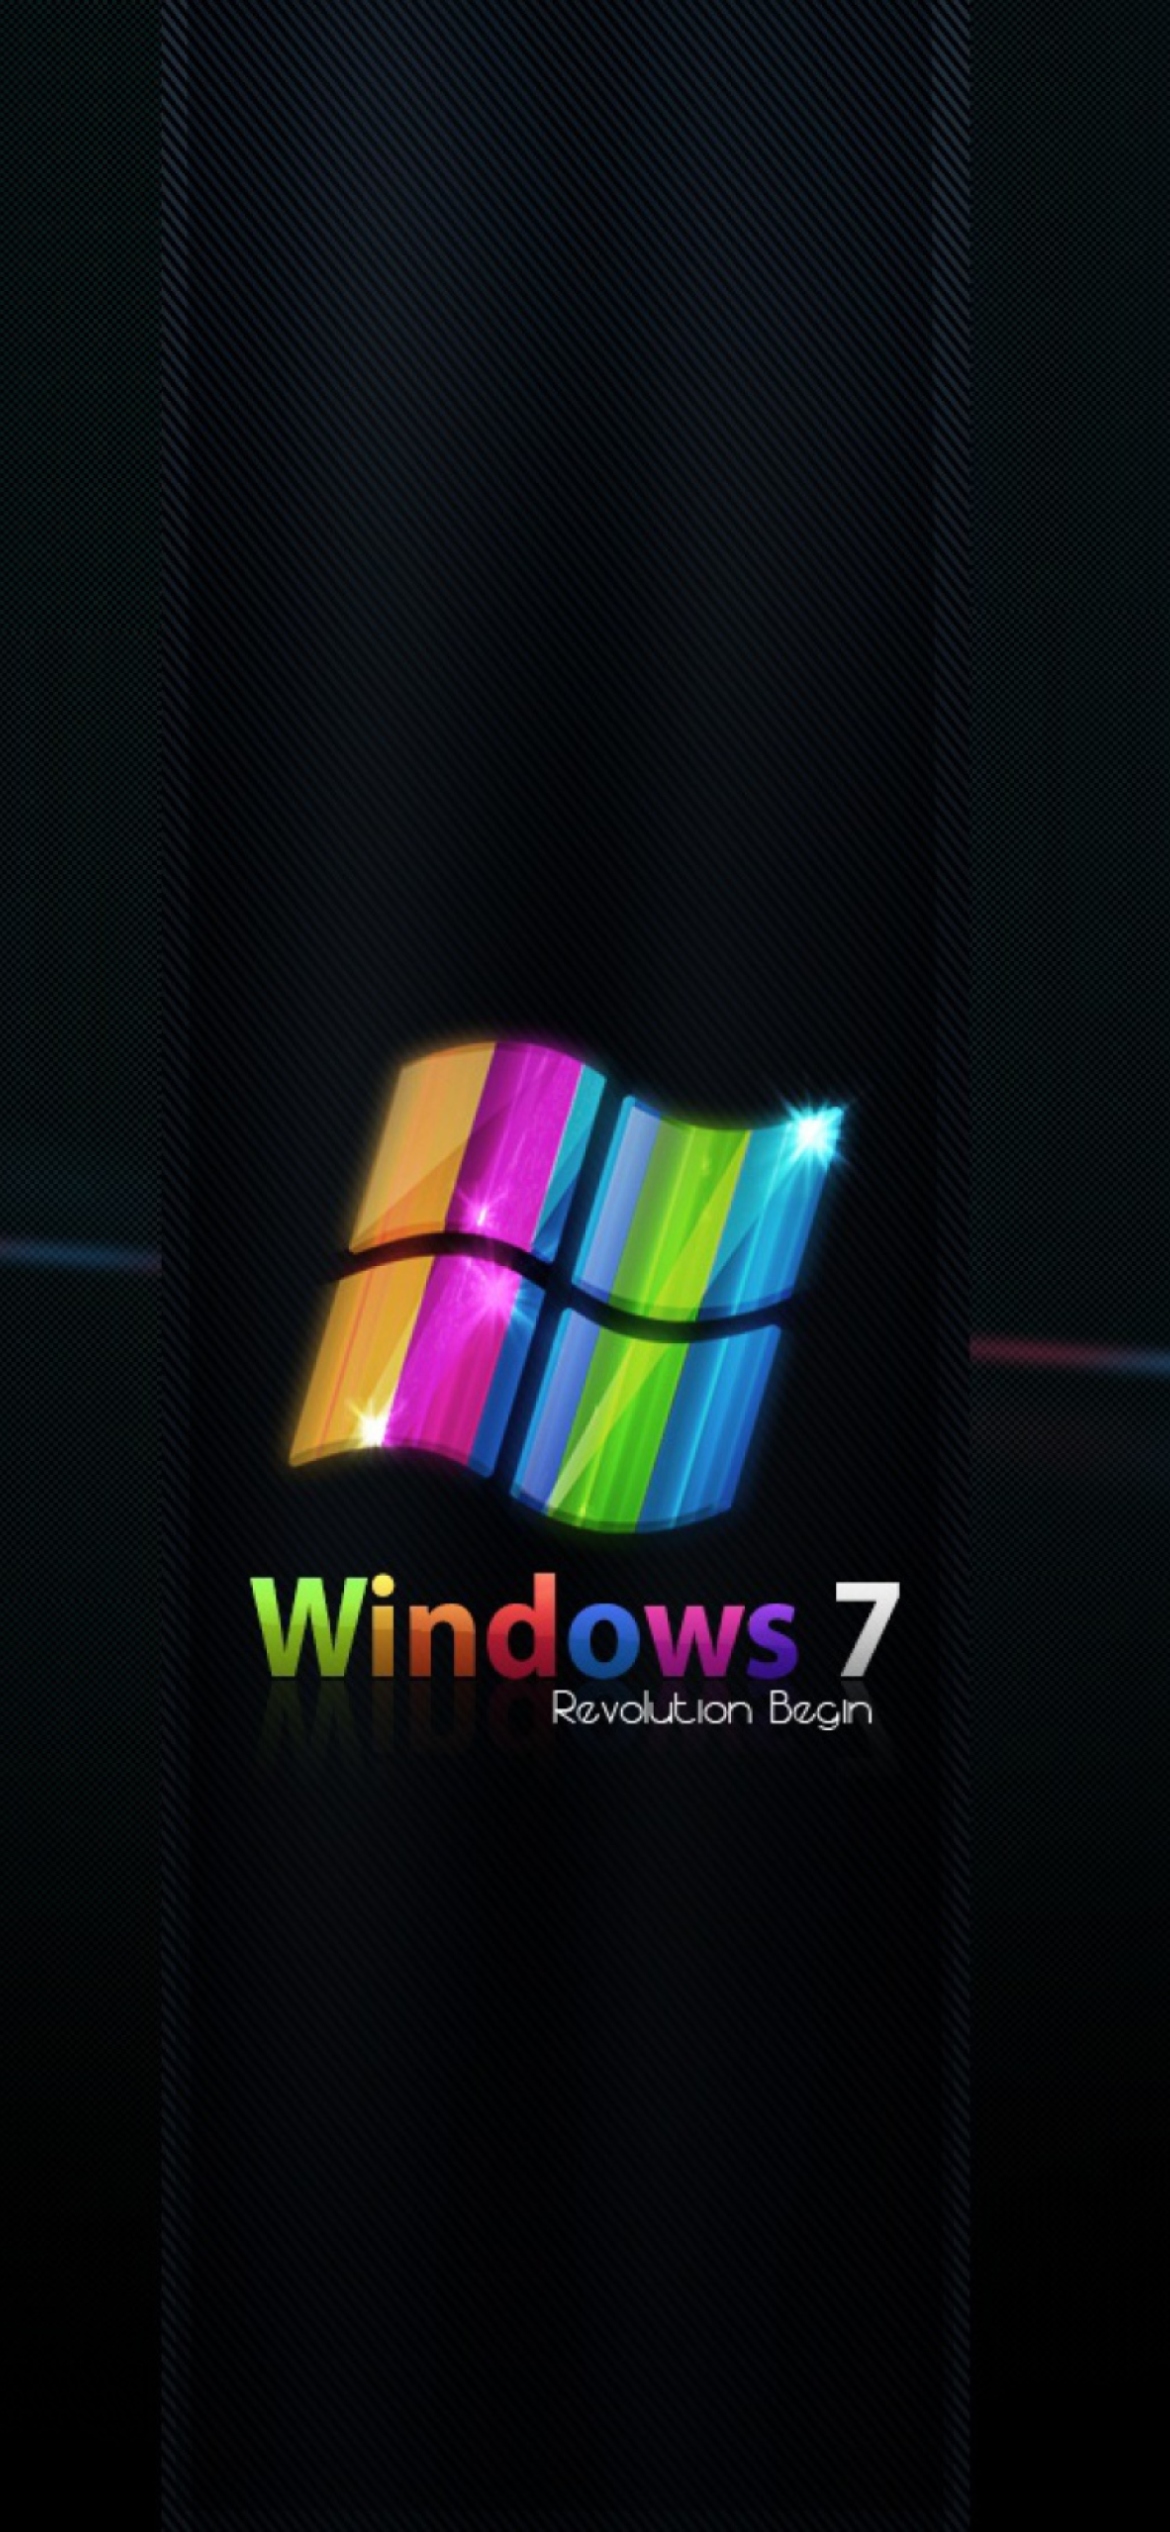 Windows 7 wallpaper 1170x2532